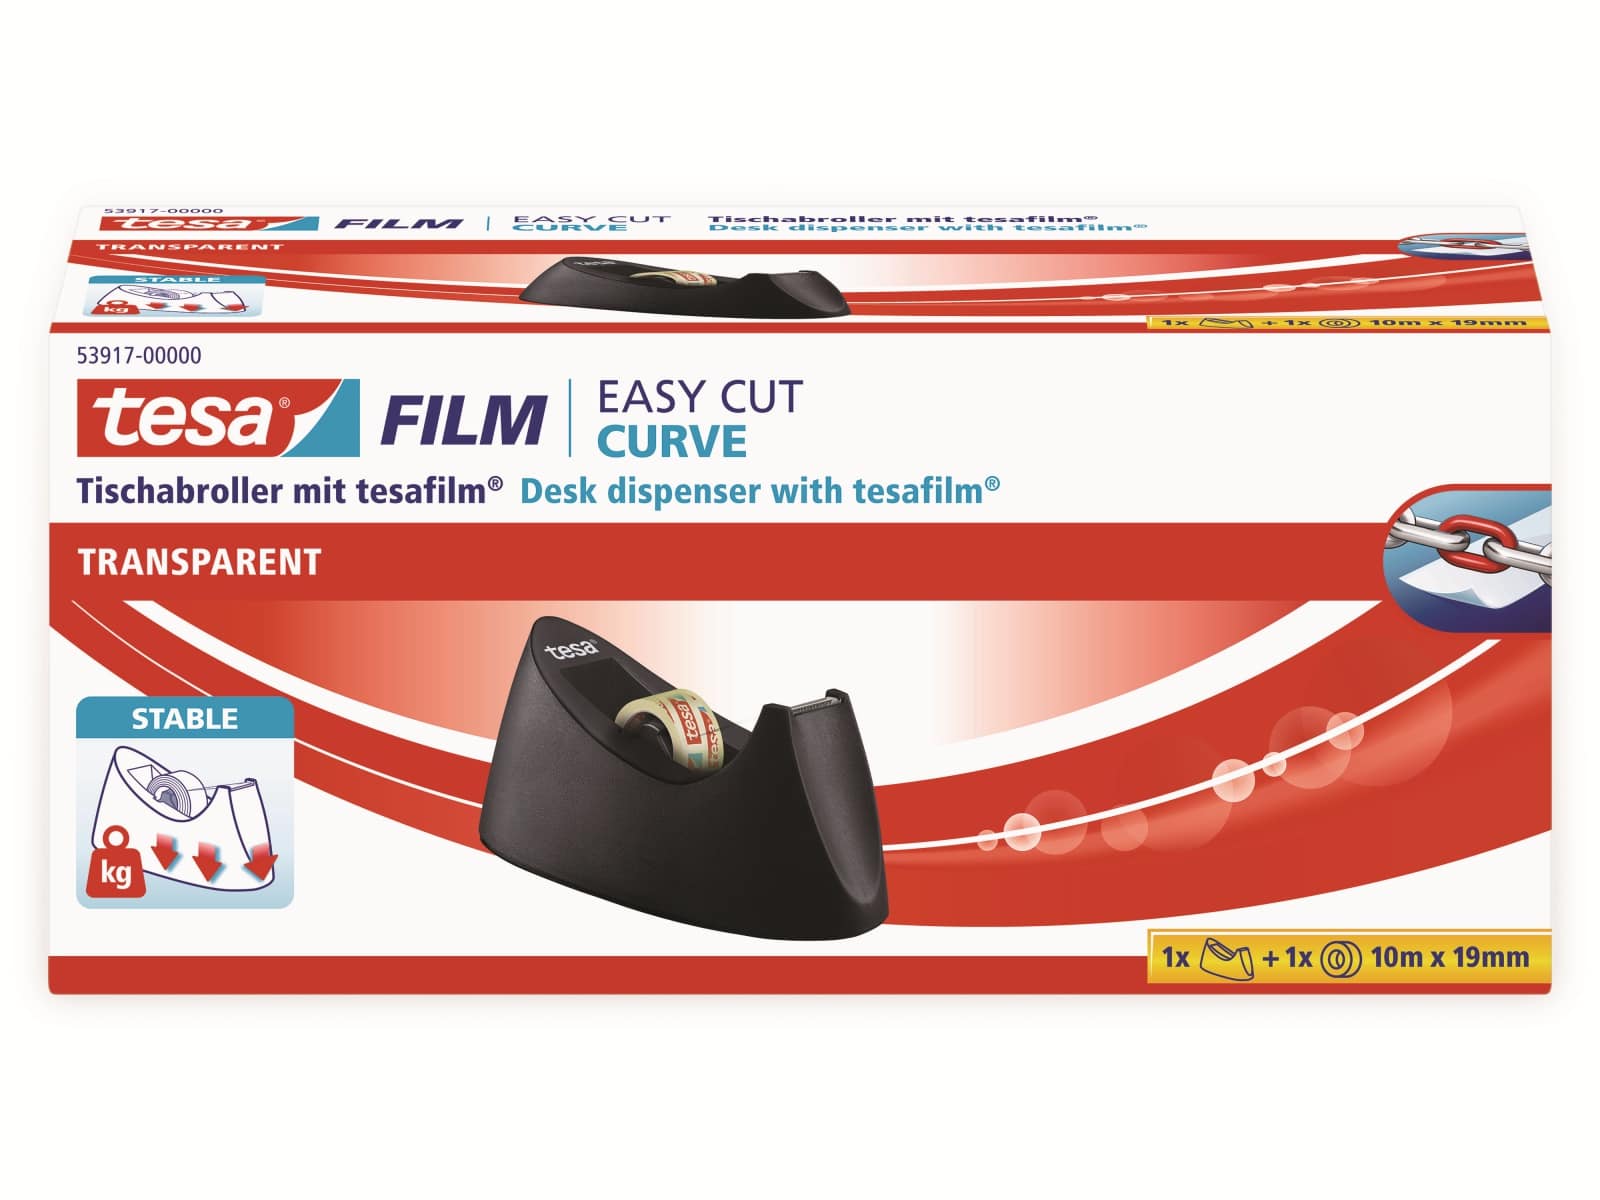 TESA film® Tischabroller Curve + film® transparent, 1 Rolle 10m:19mm, 53917-00000-00